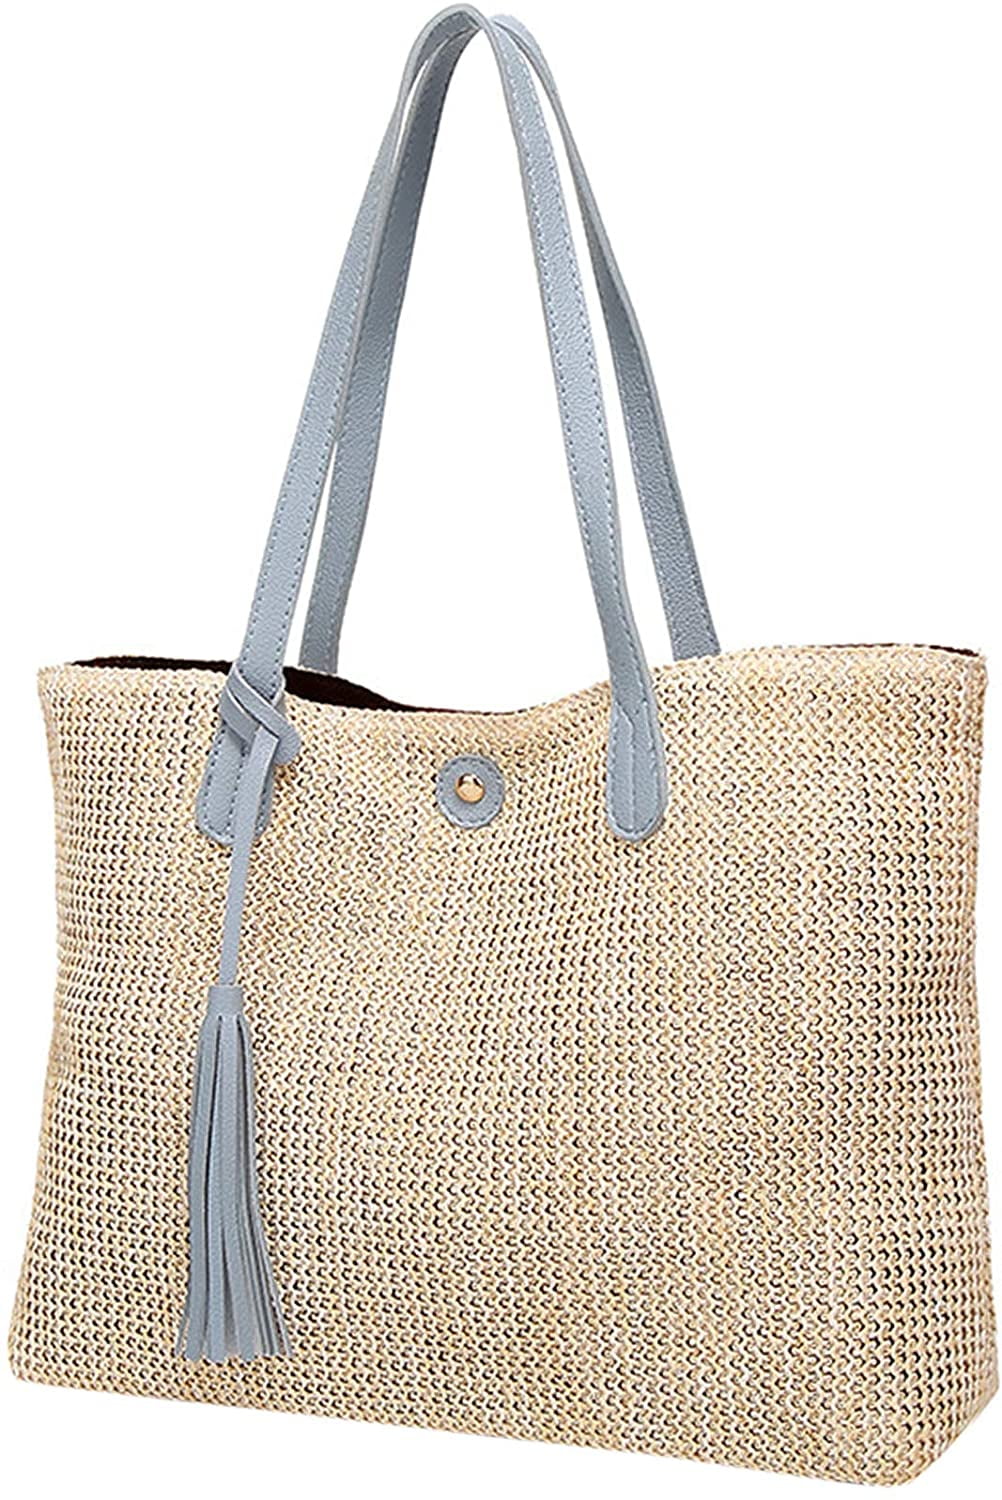 YOUI-GIFTS Straw Handbags Women's Summer Beach Straw Bucket Tote Bag ...